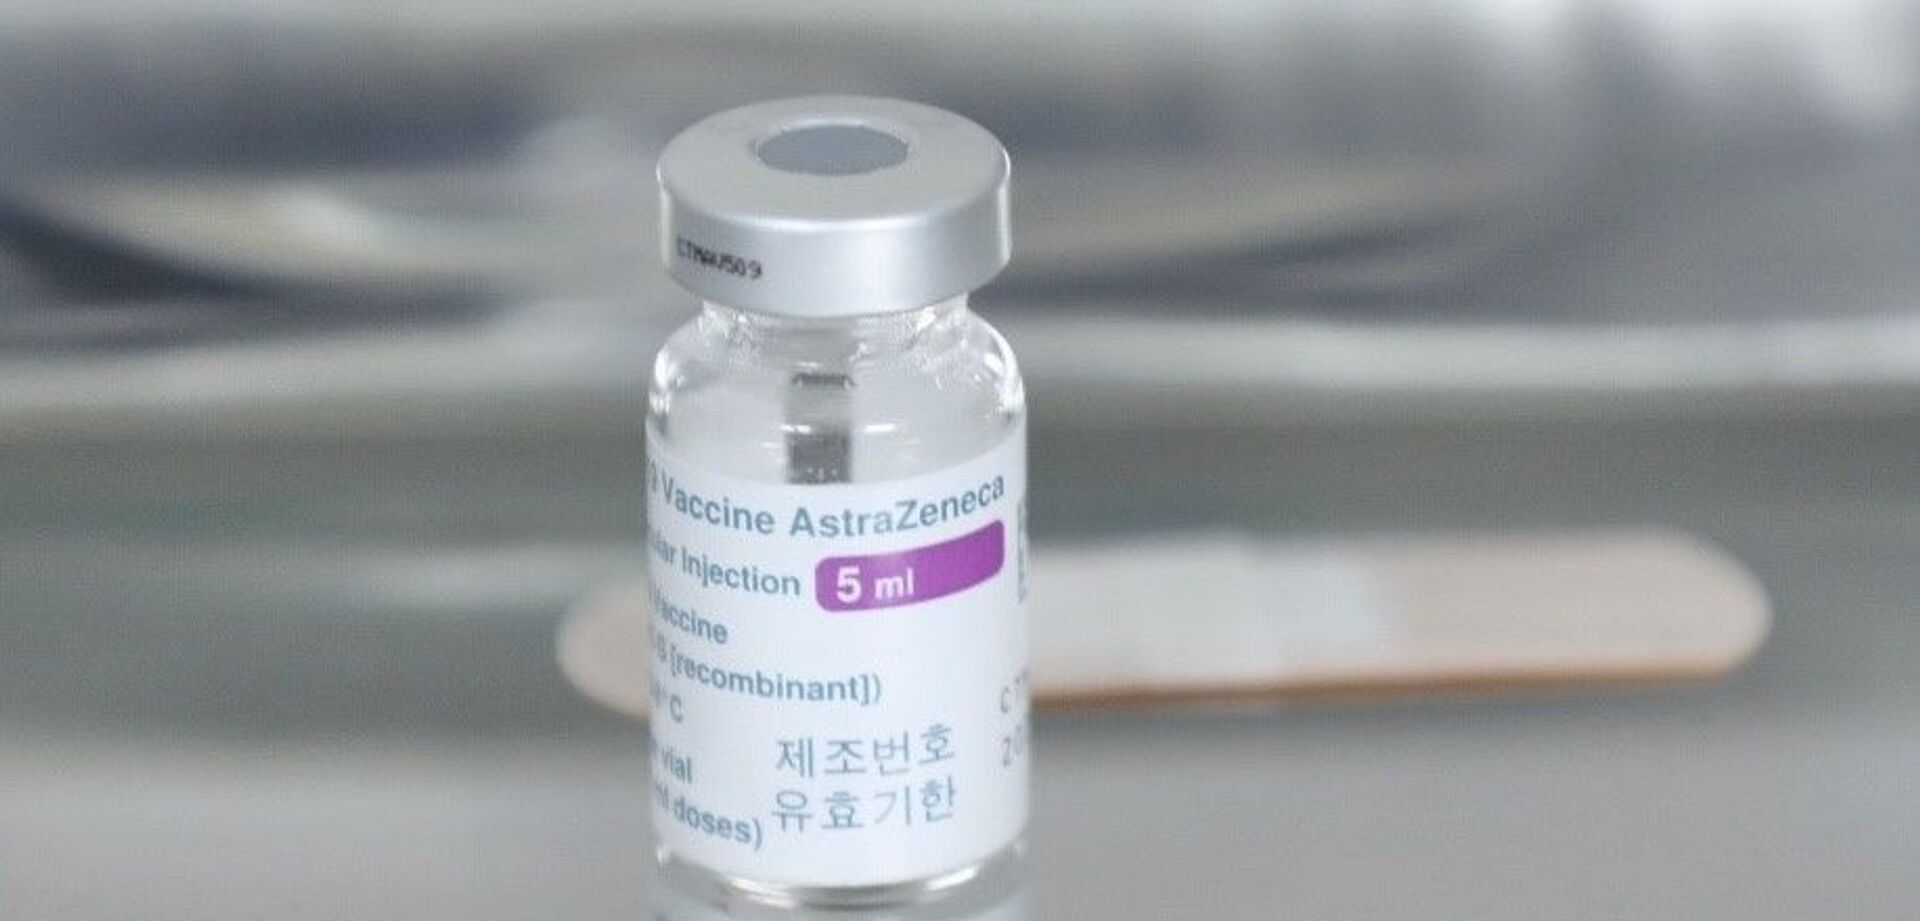 Vaccine phòng COVID-19 của AstraZeneca. - Sputnik Việt Nam, 1920, 23.03.2021